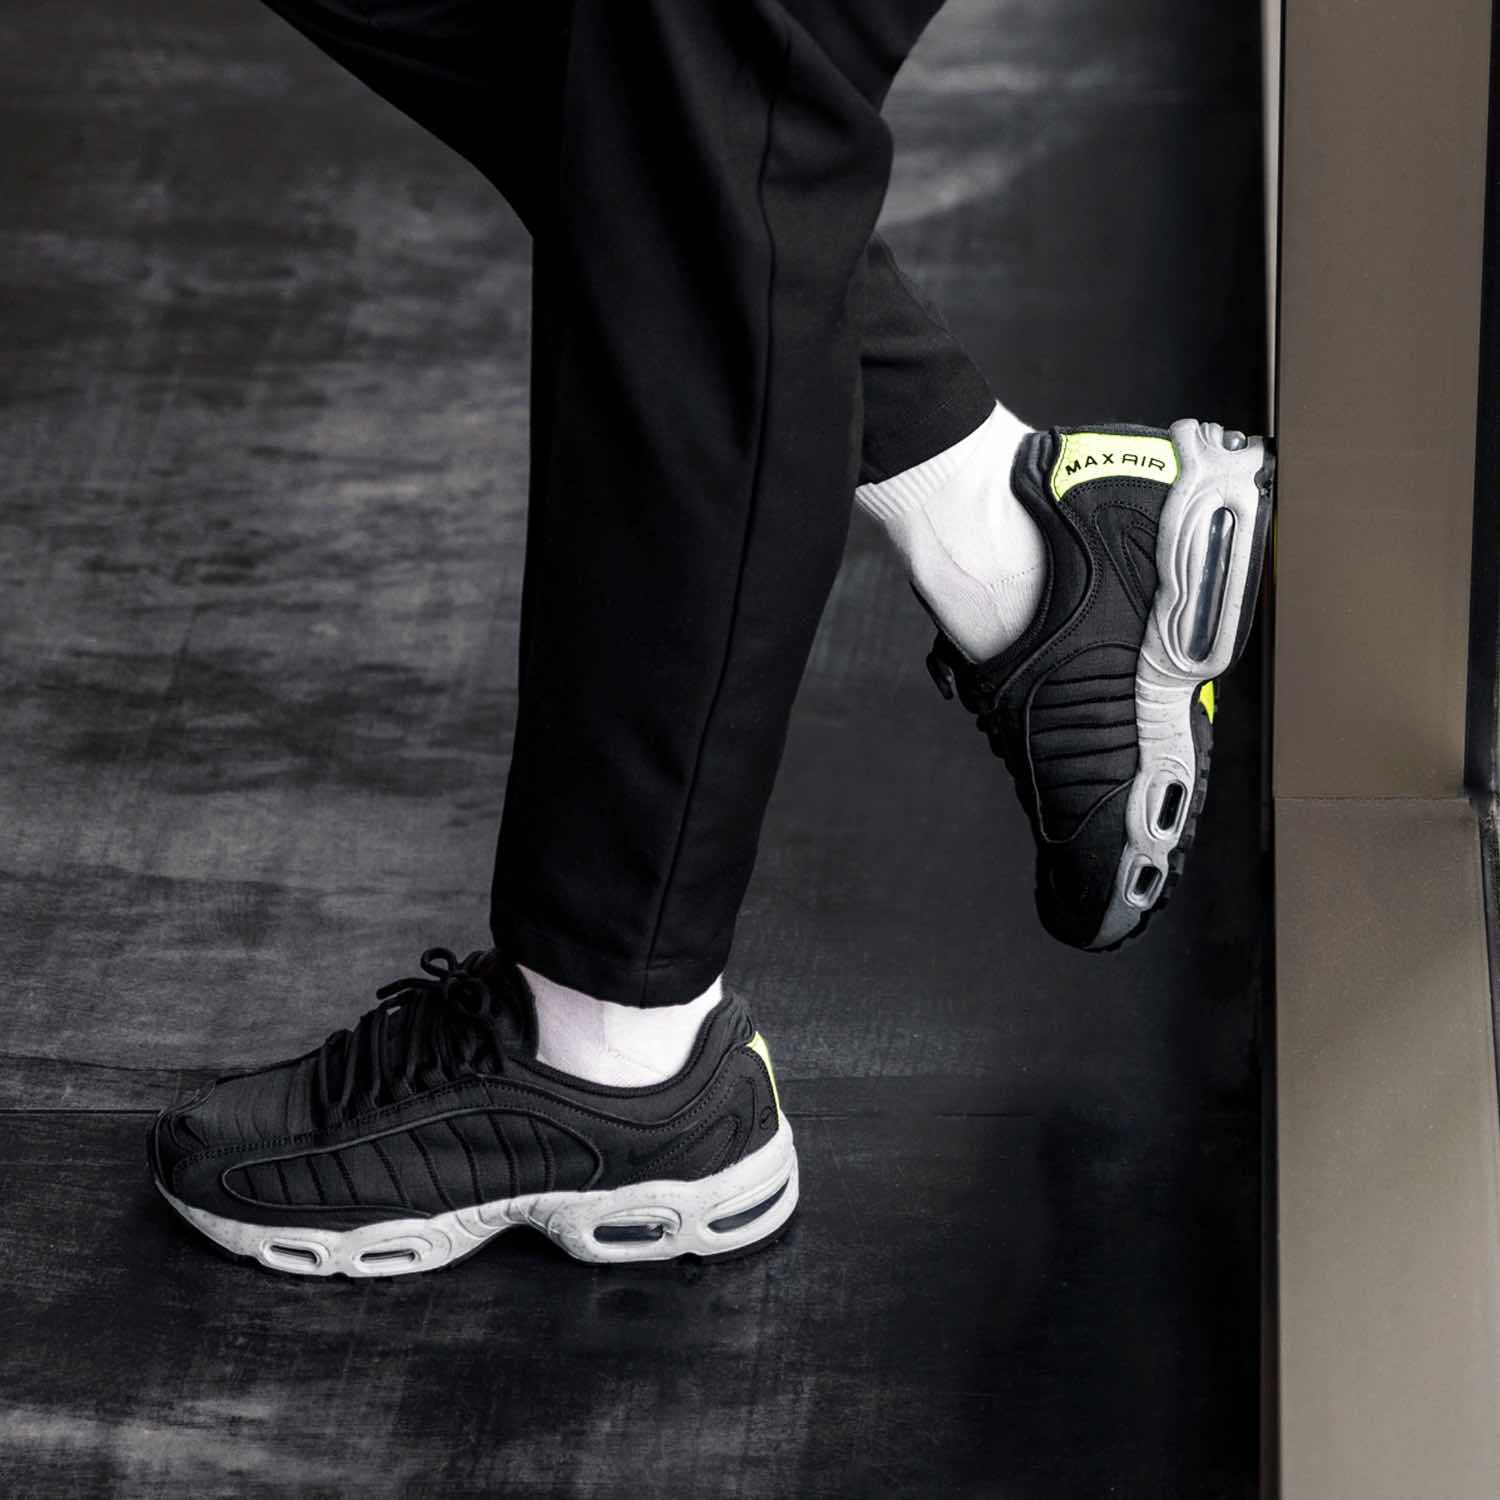 Nike Air Max Tailwind IV
Black / Grey / Volt